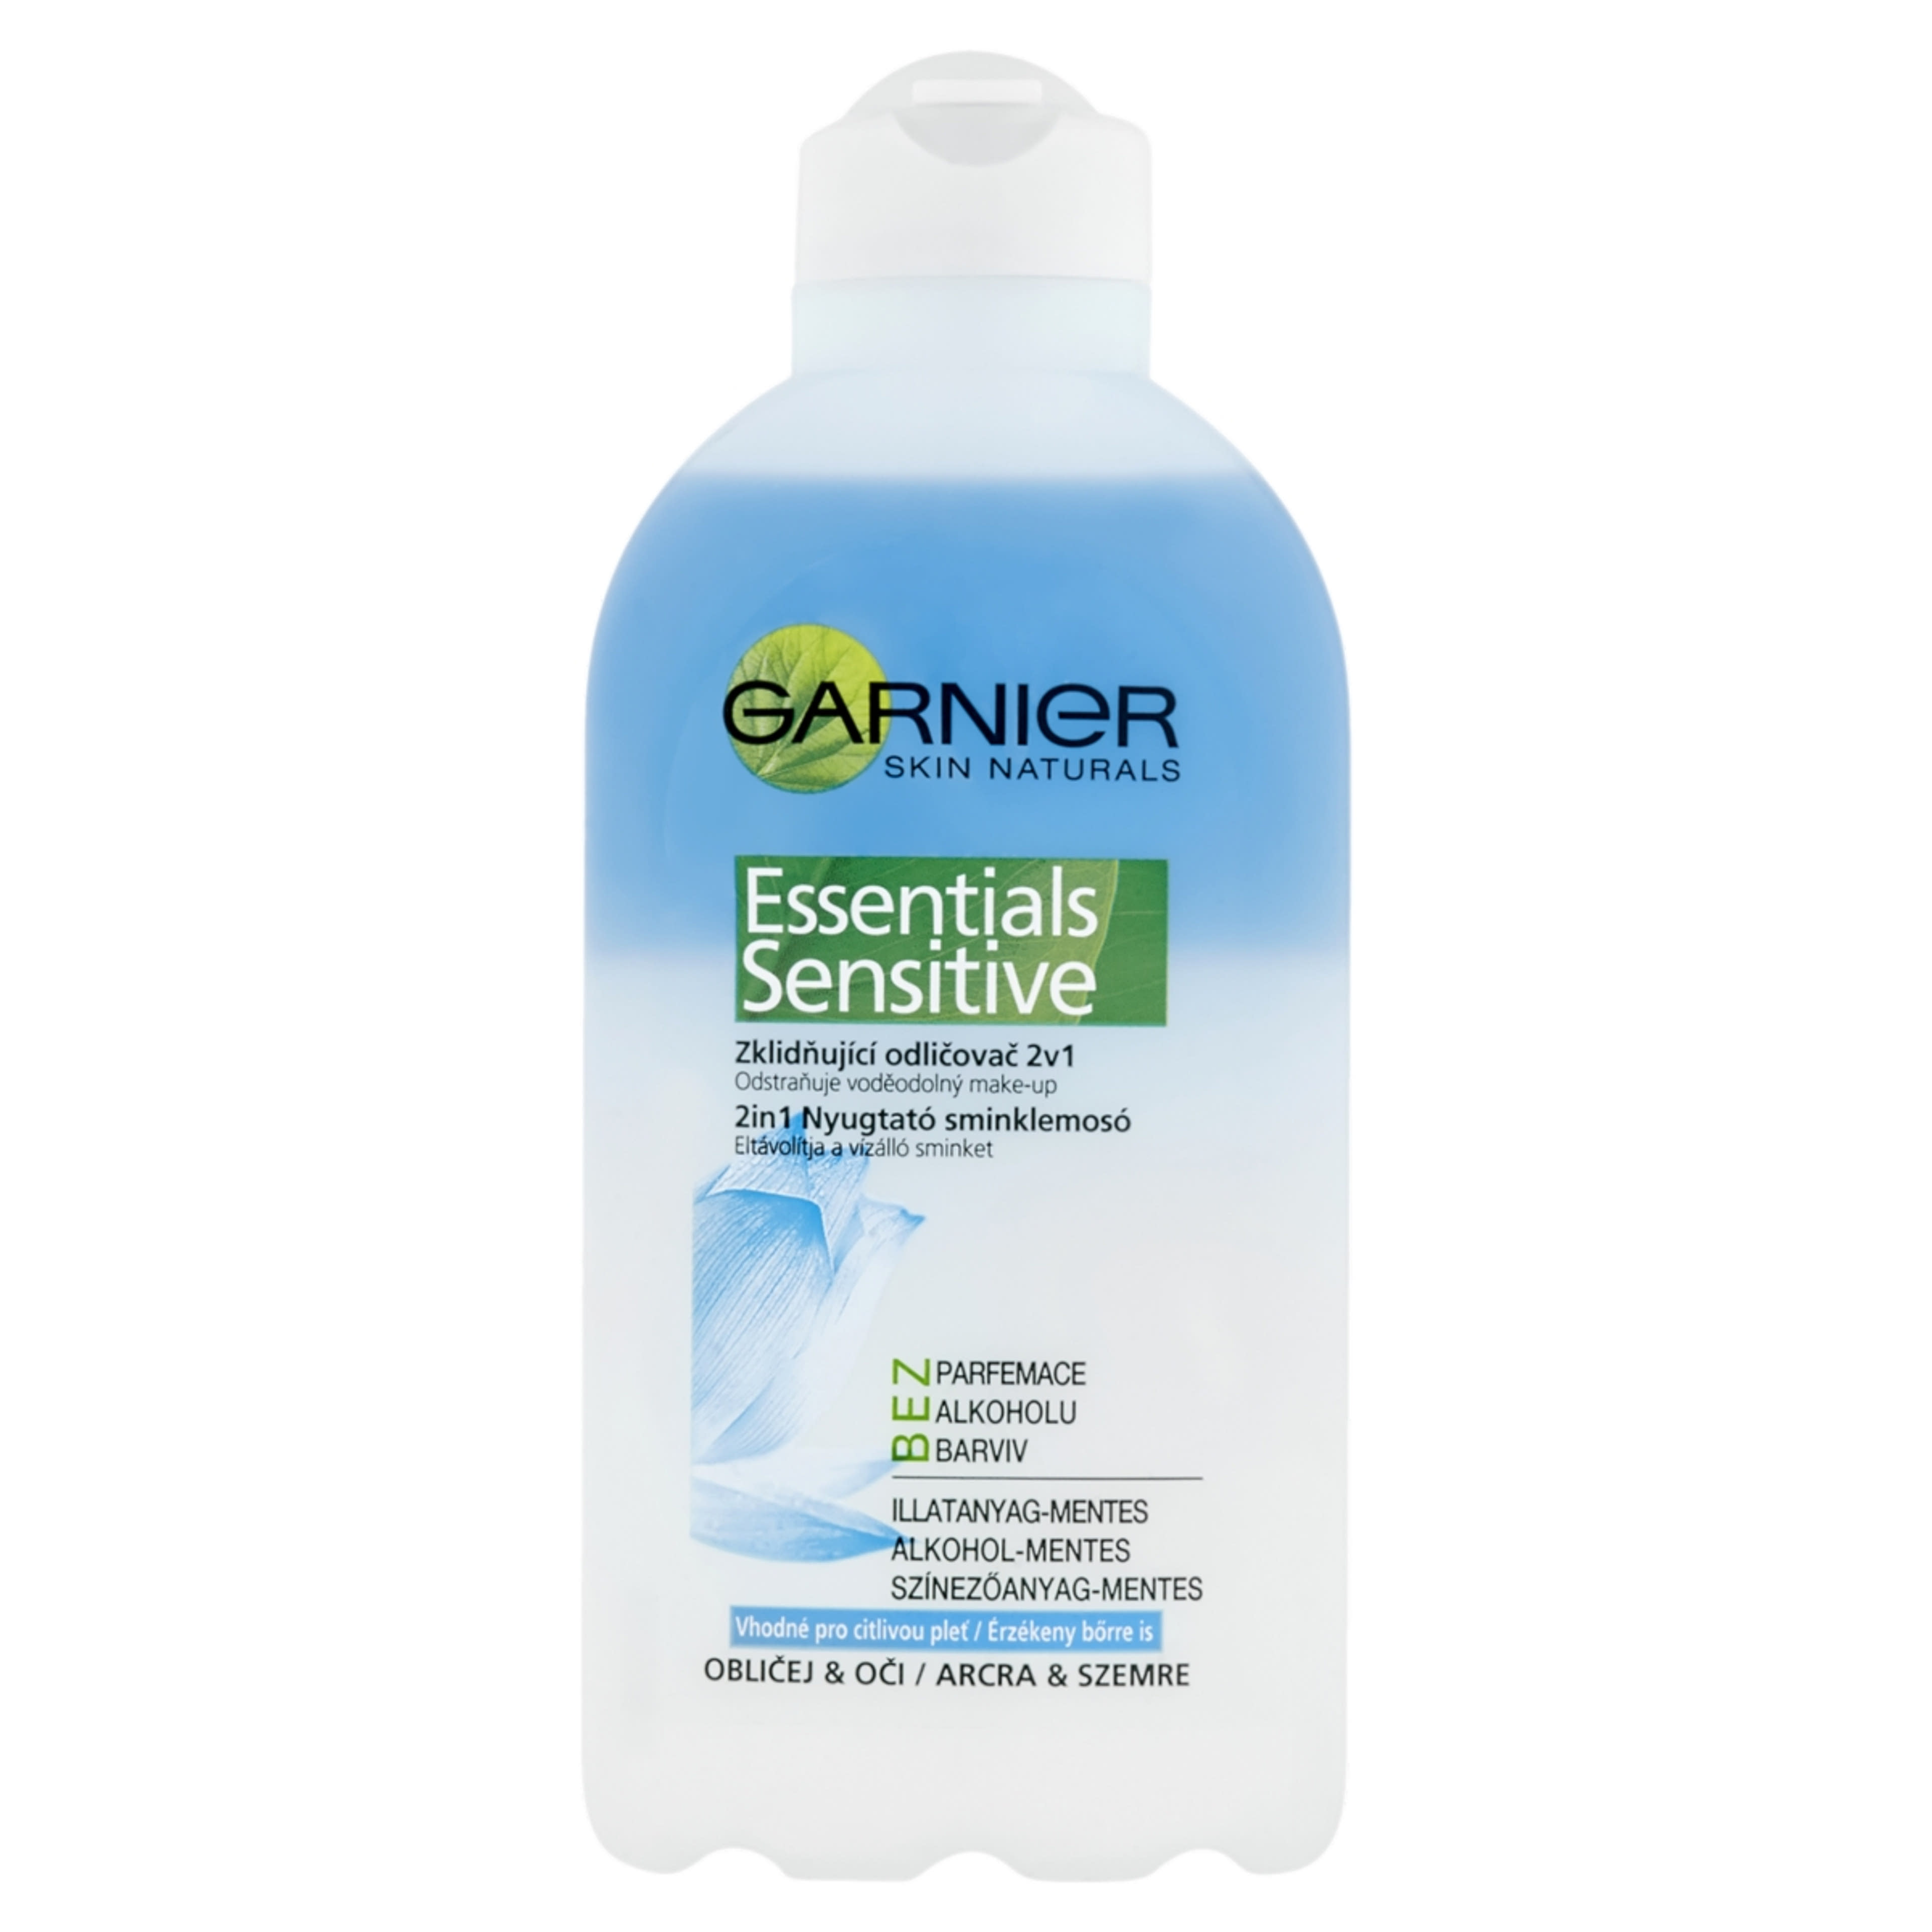 Garnier Skin Naturals 2in1 Nyugtató Sminklemosó - 200 ml